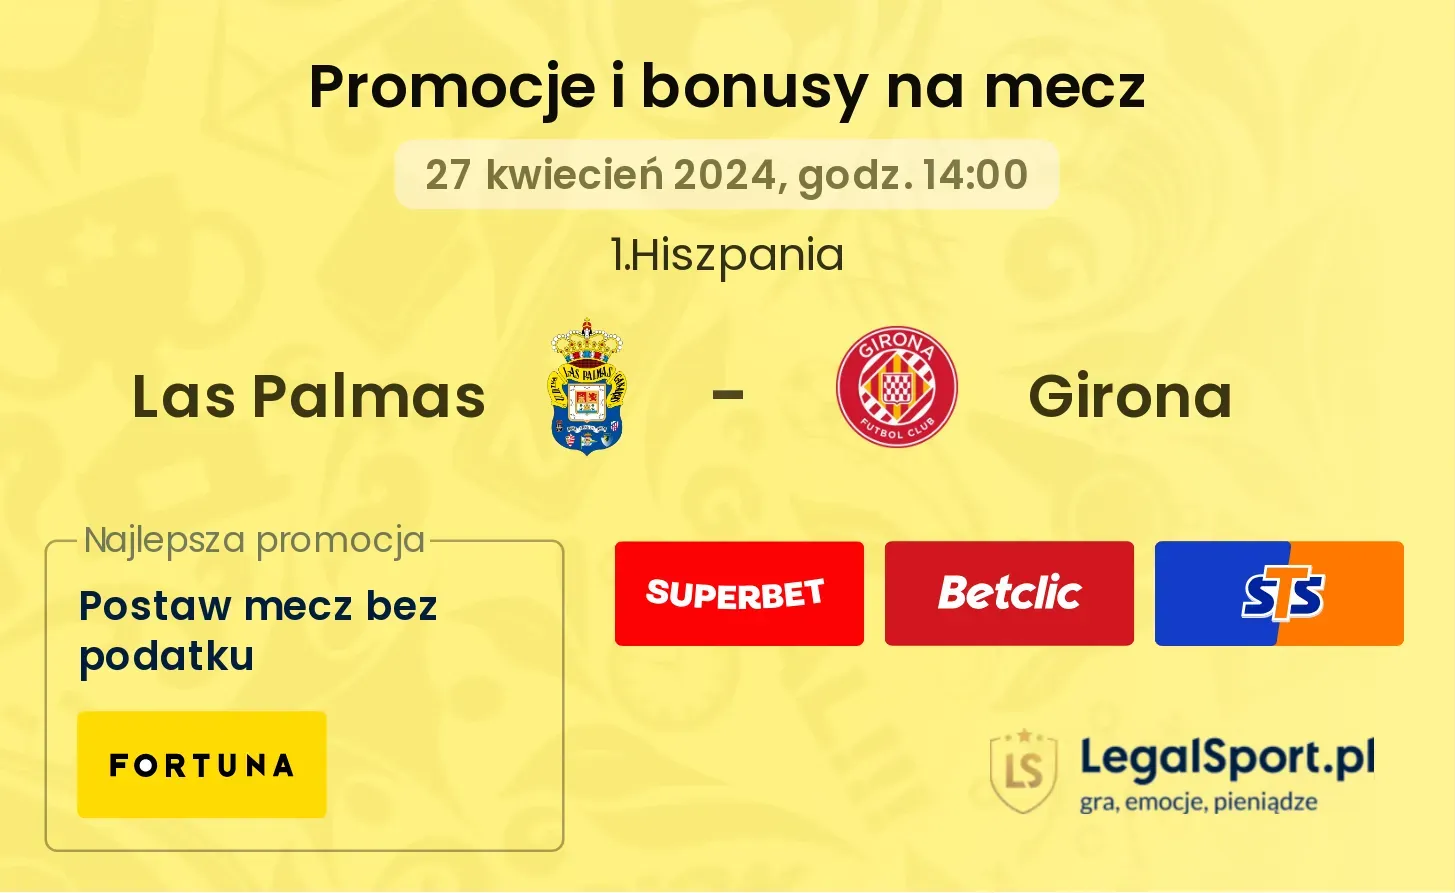 Las Palmas - Girona promocje bonusy na mecz